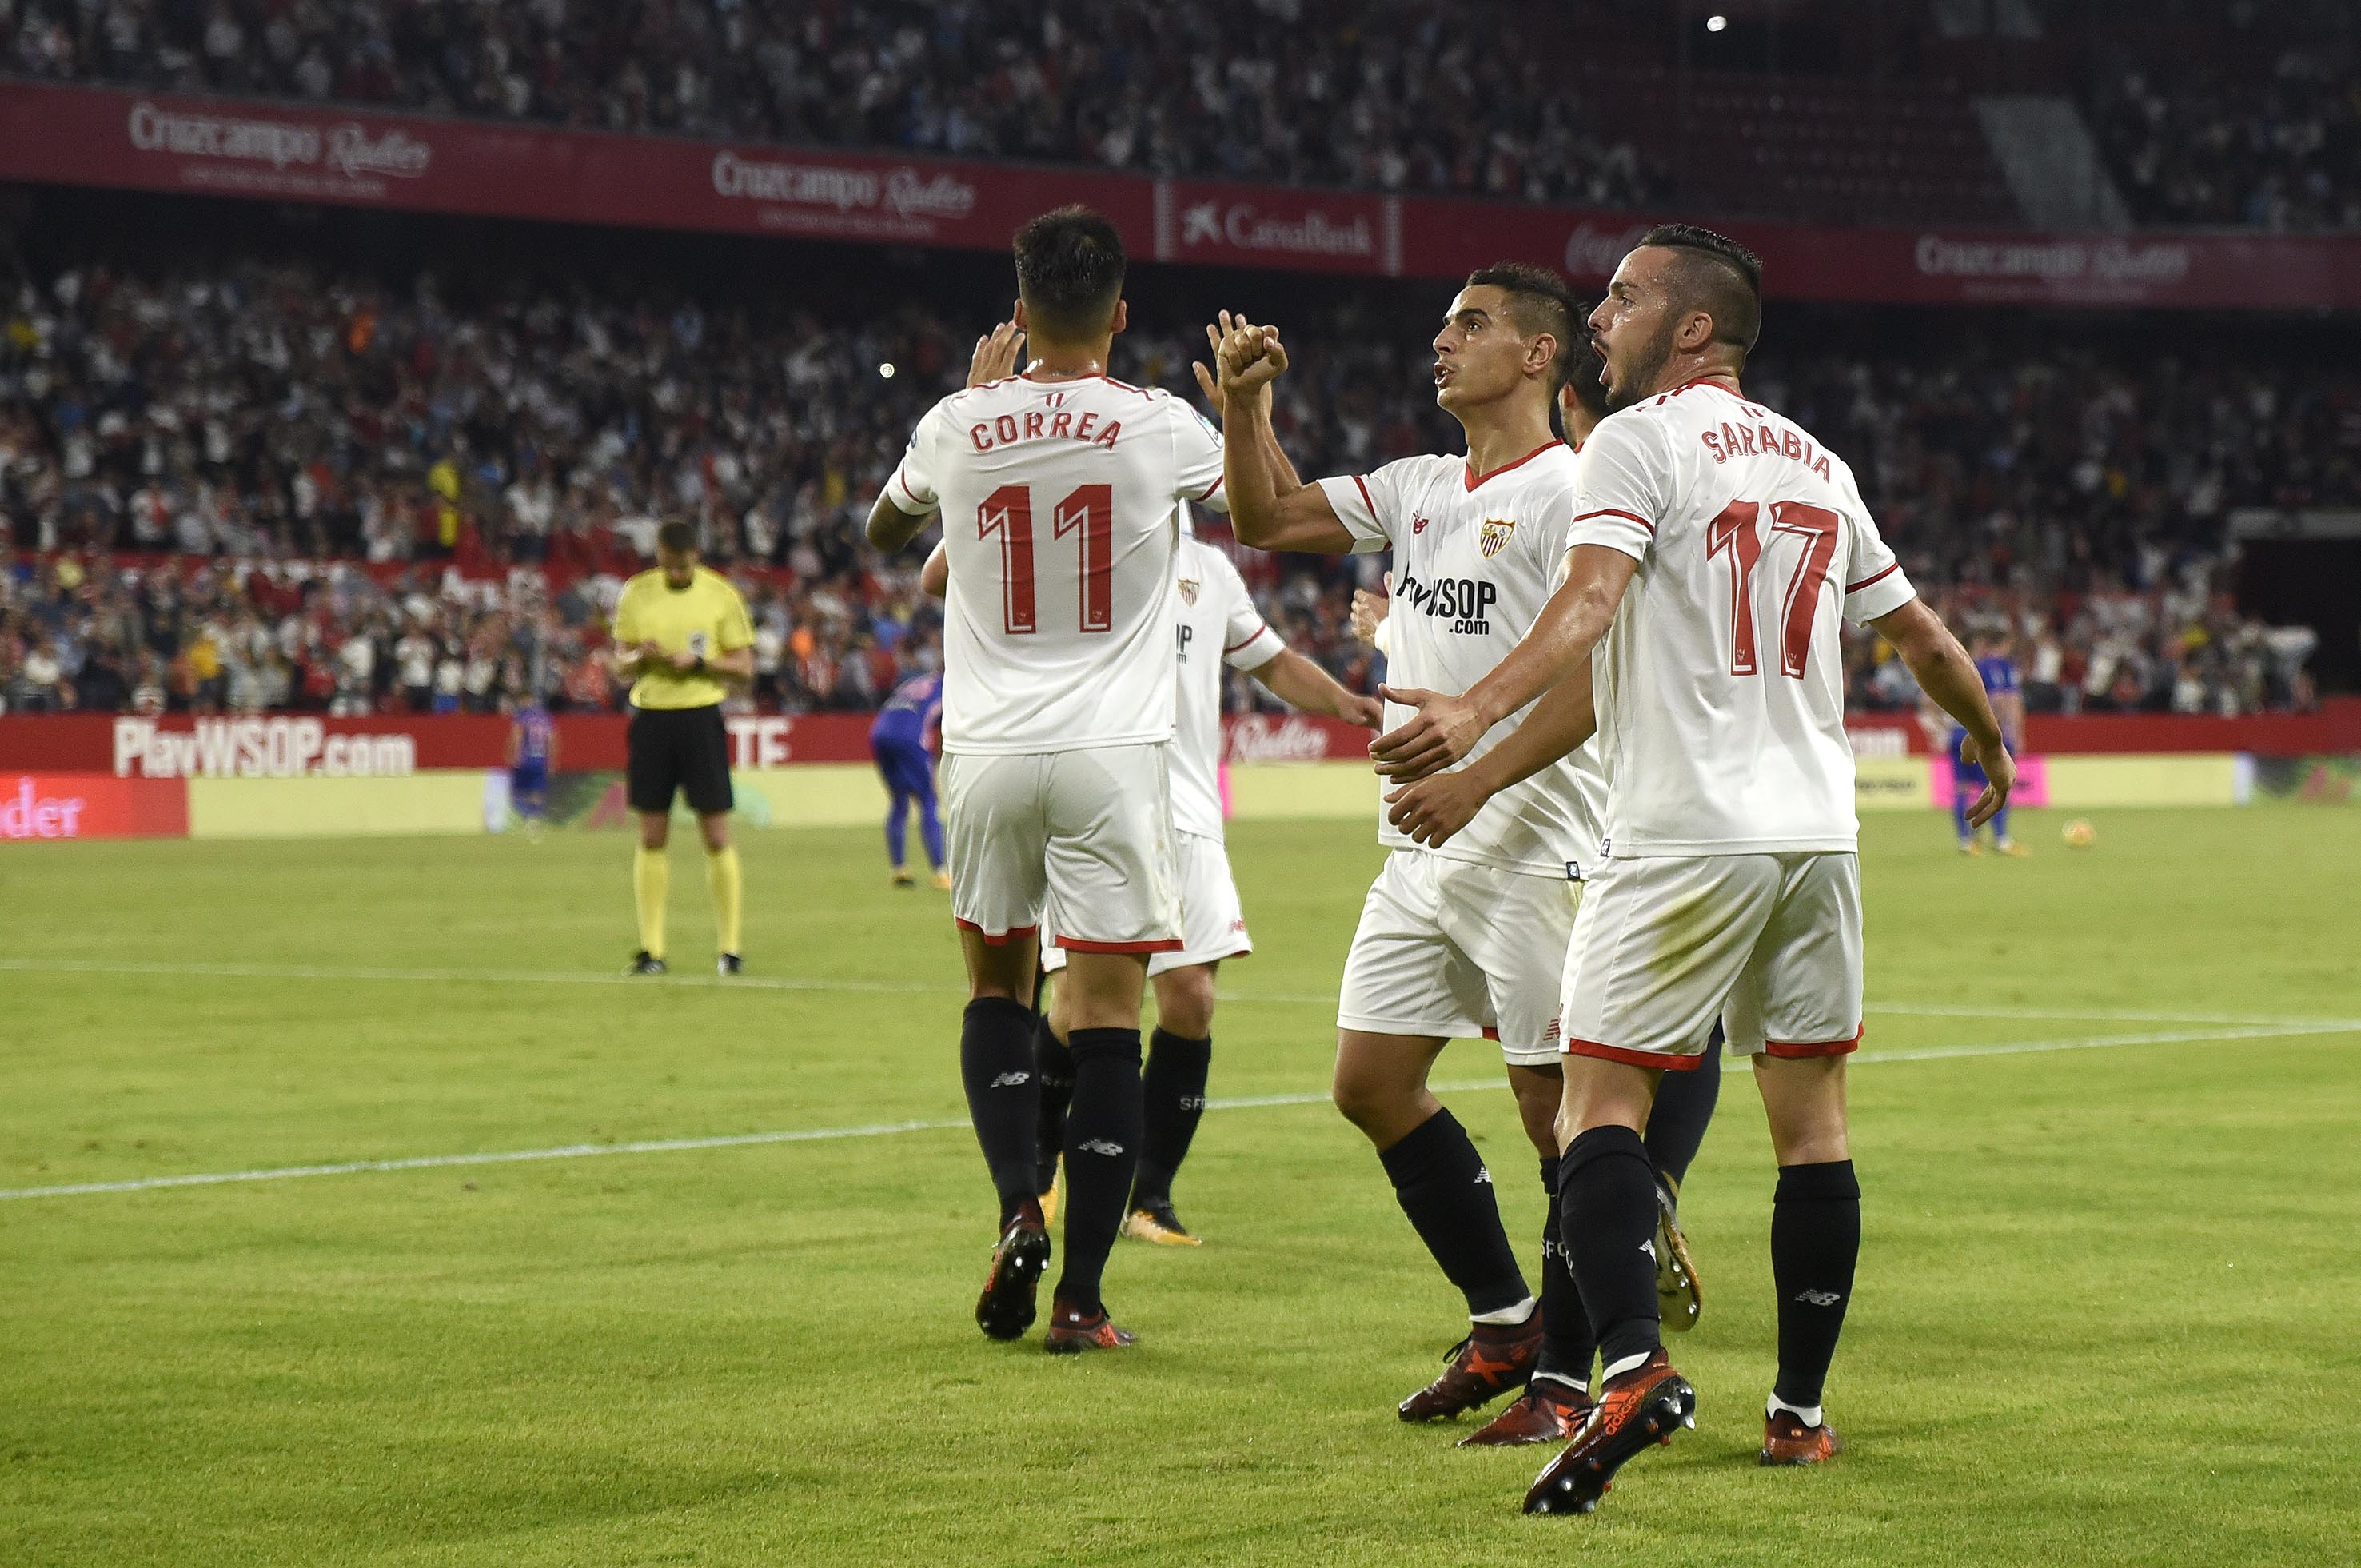 Celebration of goal against Leganés in La Liga